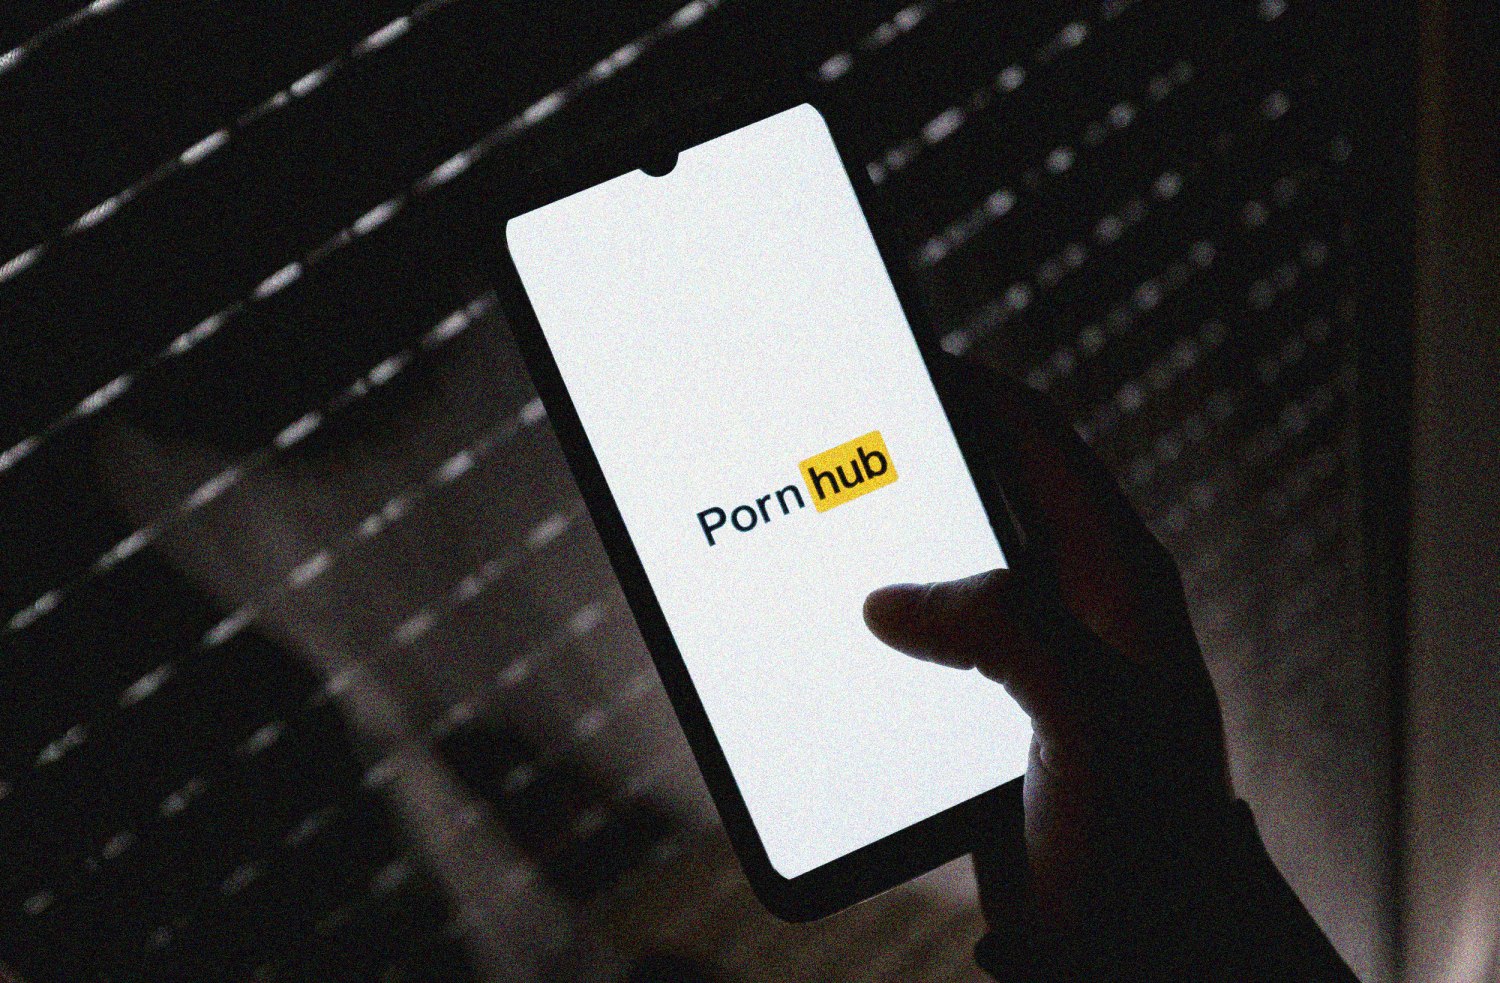 Porahub - Meet Pornhub's new owner: Ethical Capital Partners